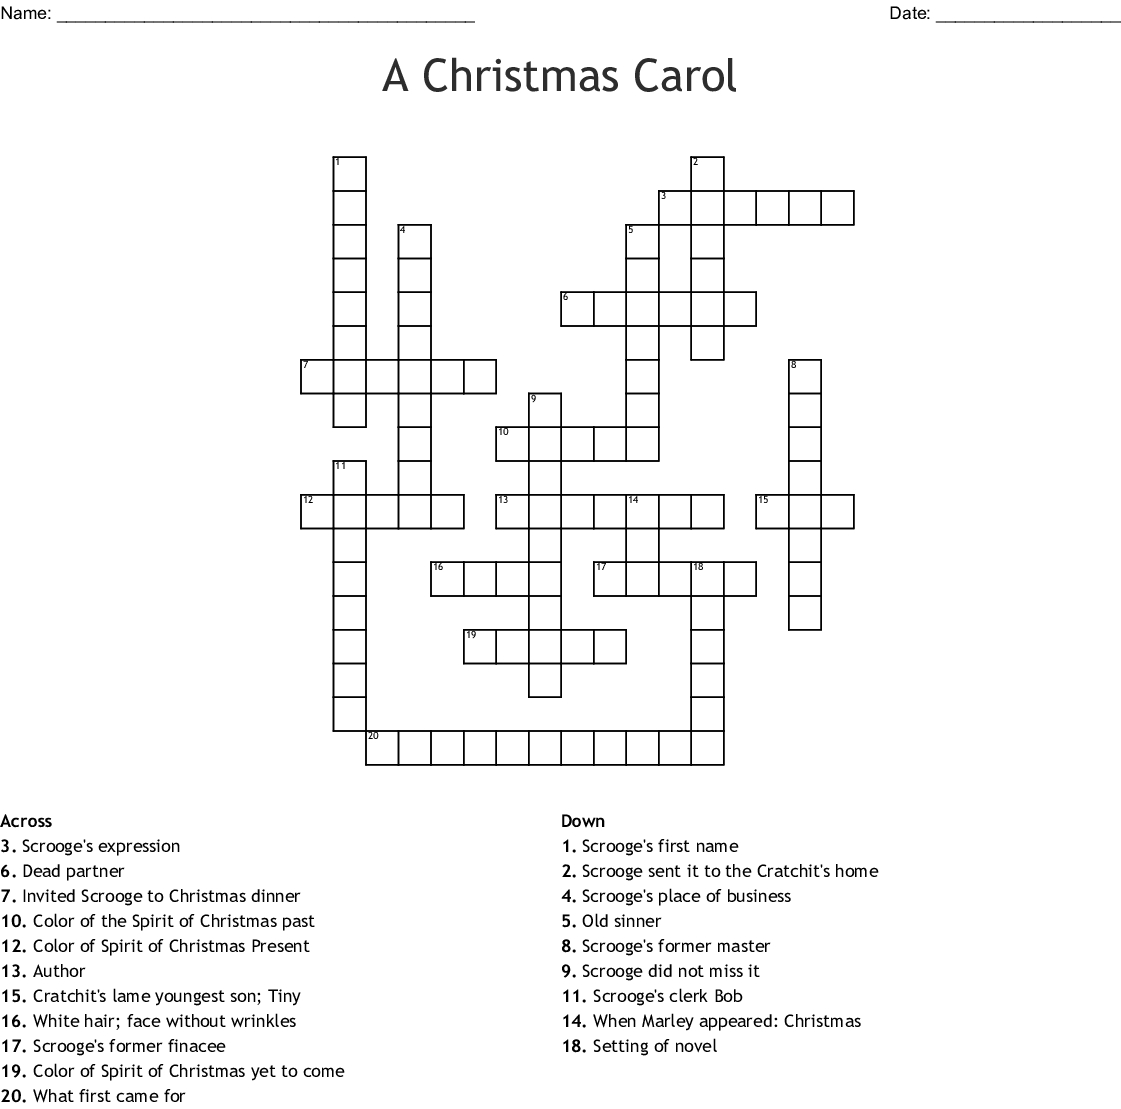 A Christmas Carol Crossword - Wordmint - A Christmas Carol Crossword Printable